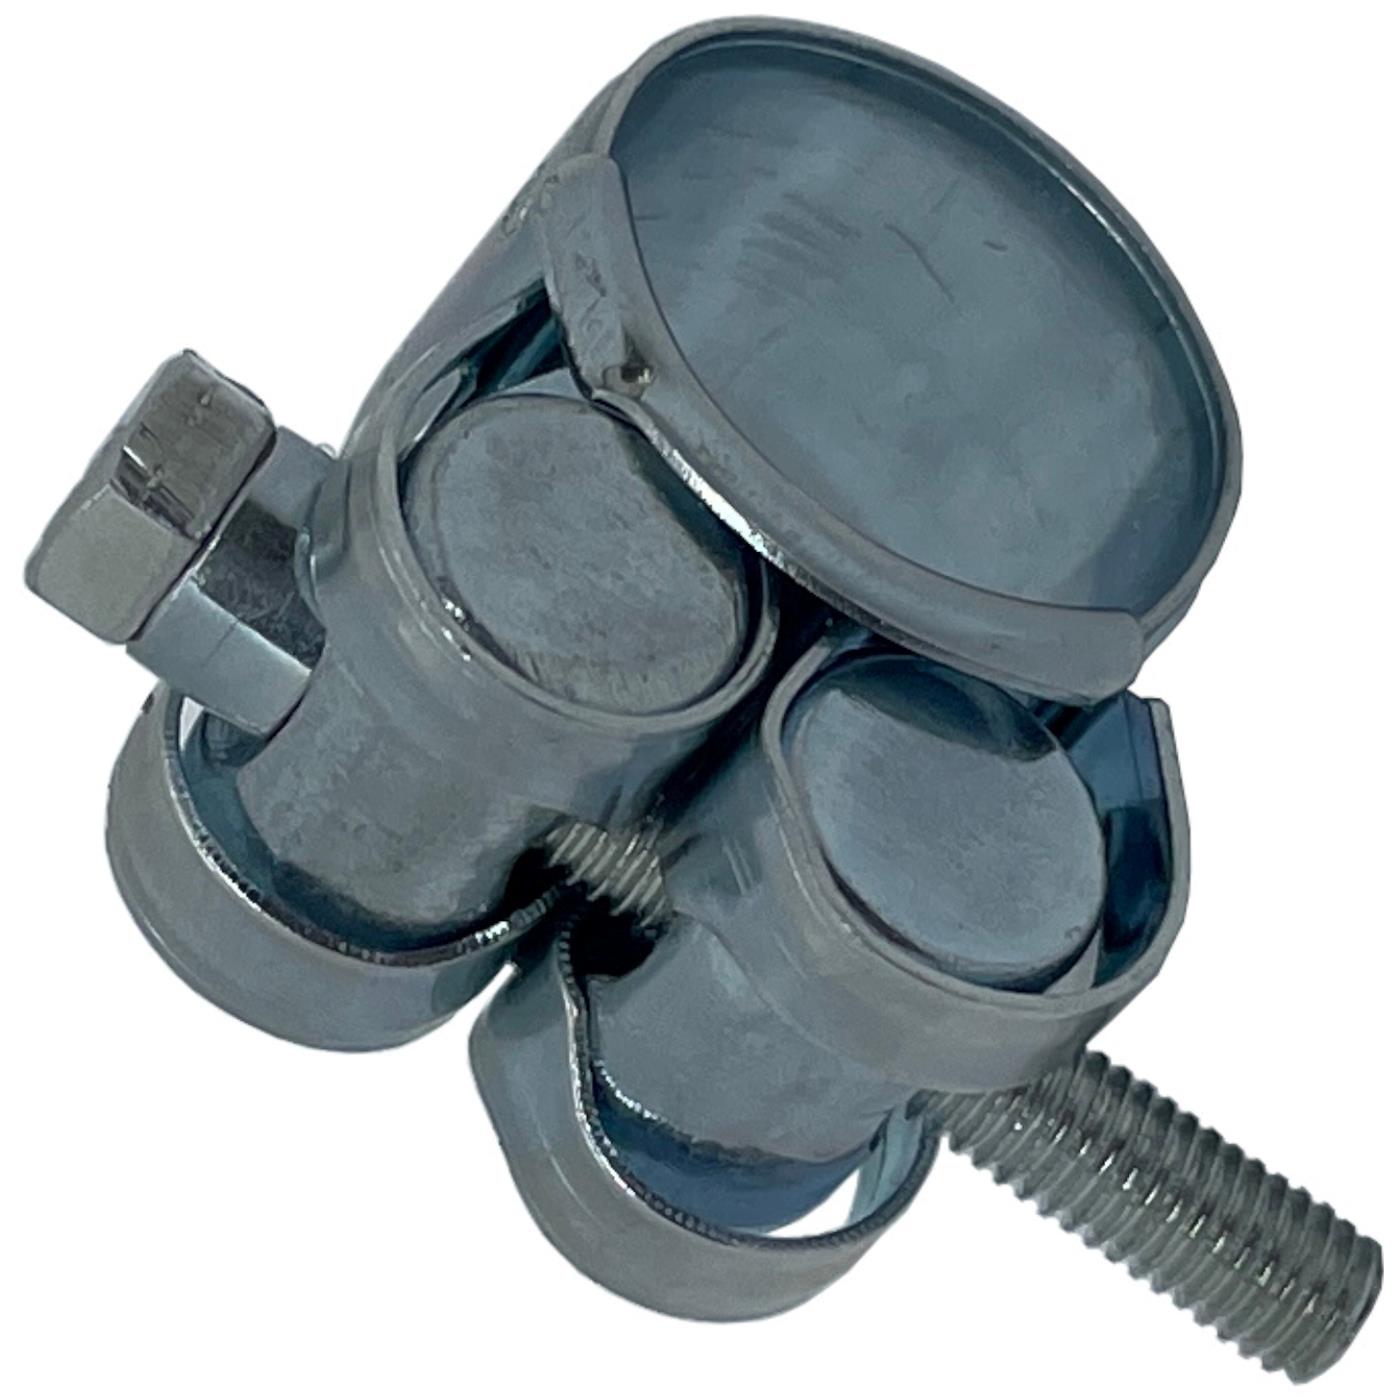 1x Lumonic Hinge pin clamp 17-19mm Galvanised Exhaust clamp for construction cars trucks